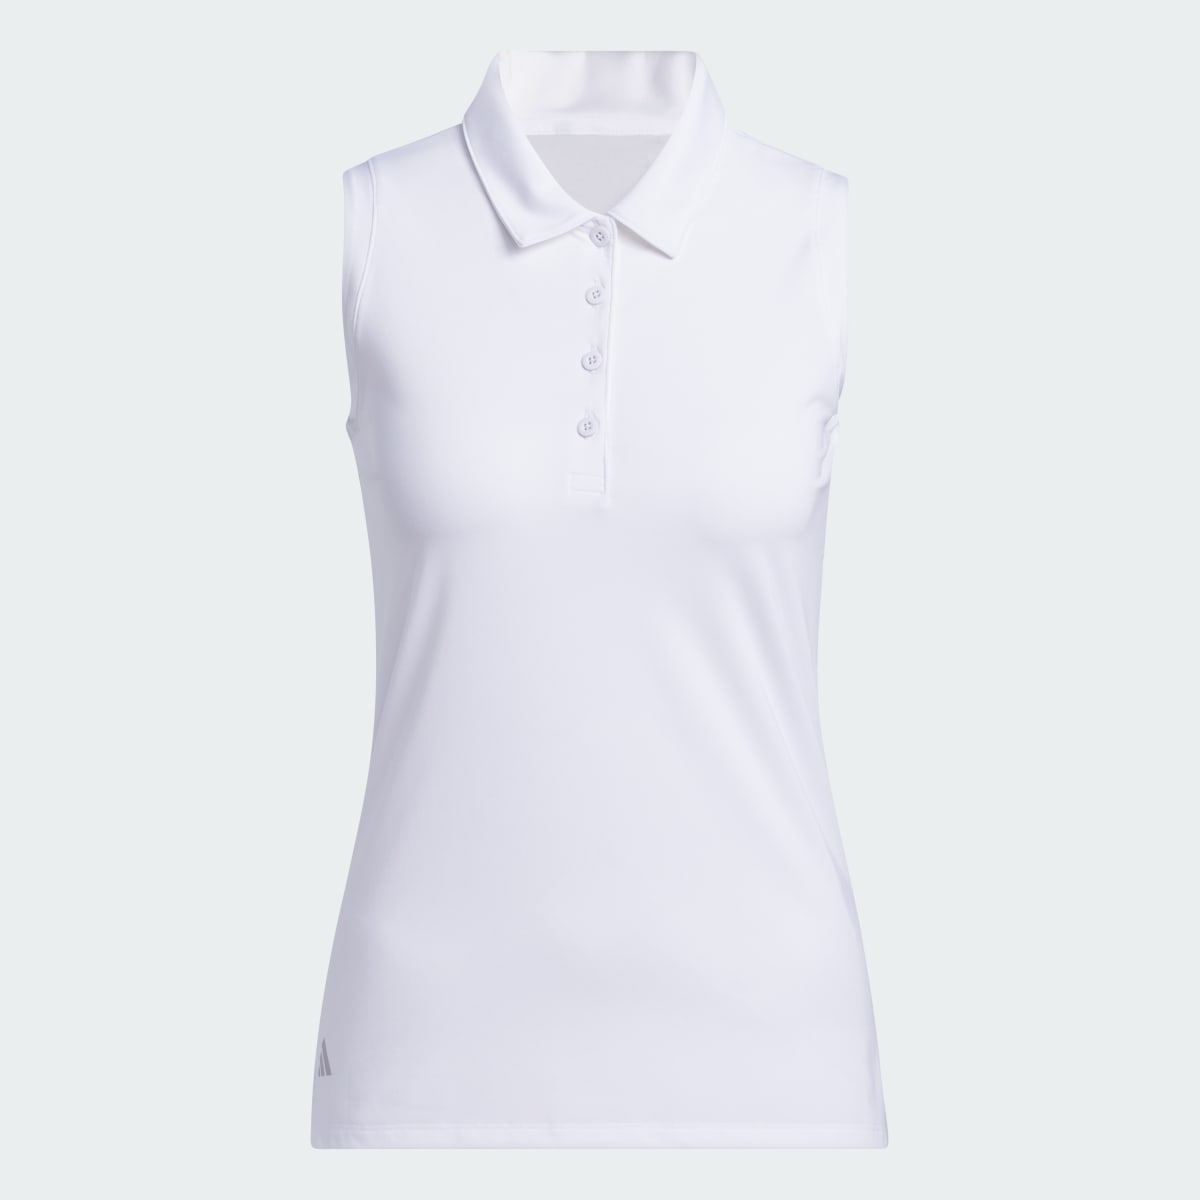 Adidas Ultimate365 Solid Sleeveless Polo Shirt. 5